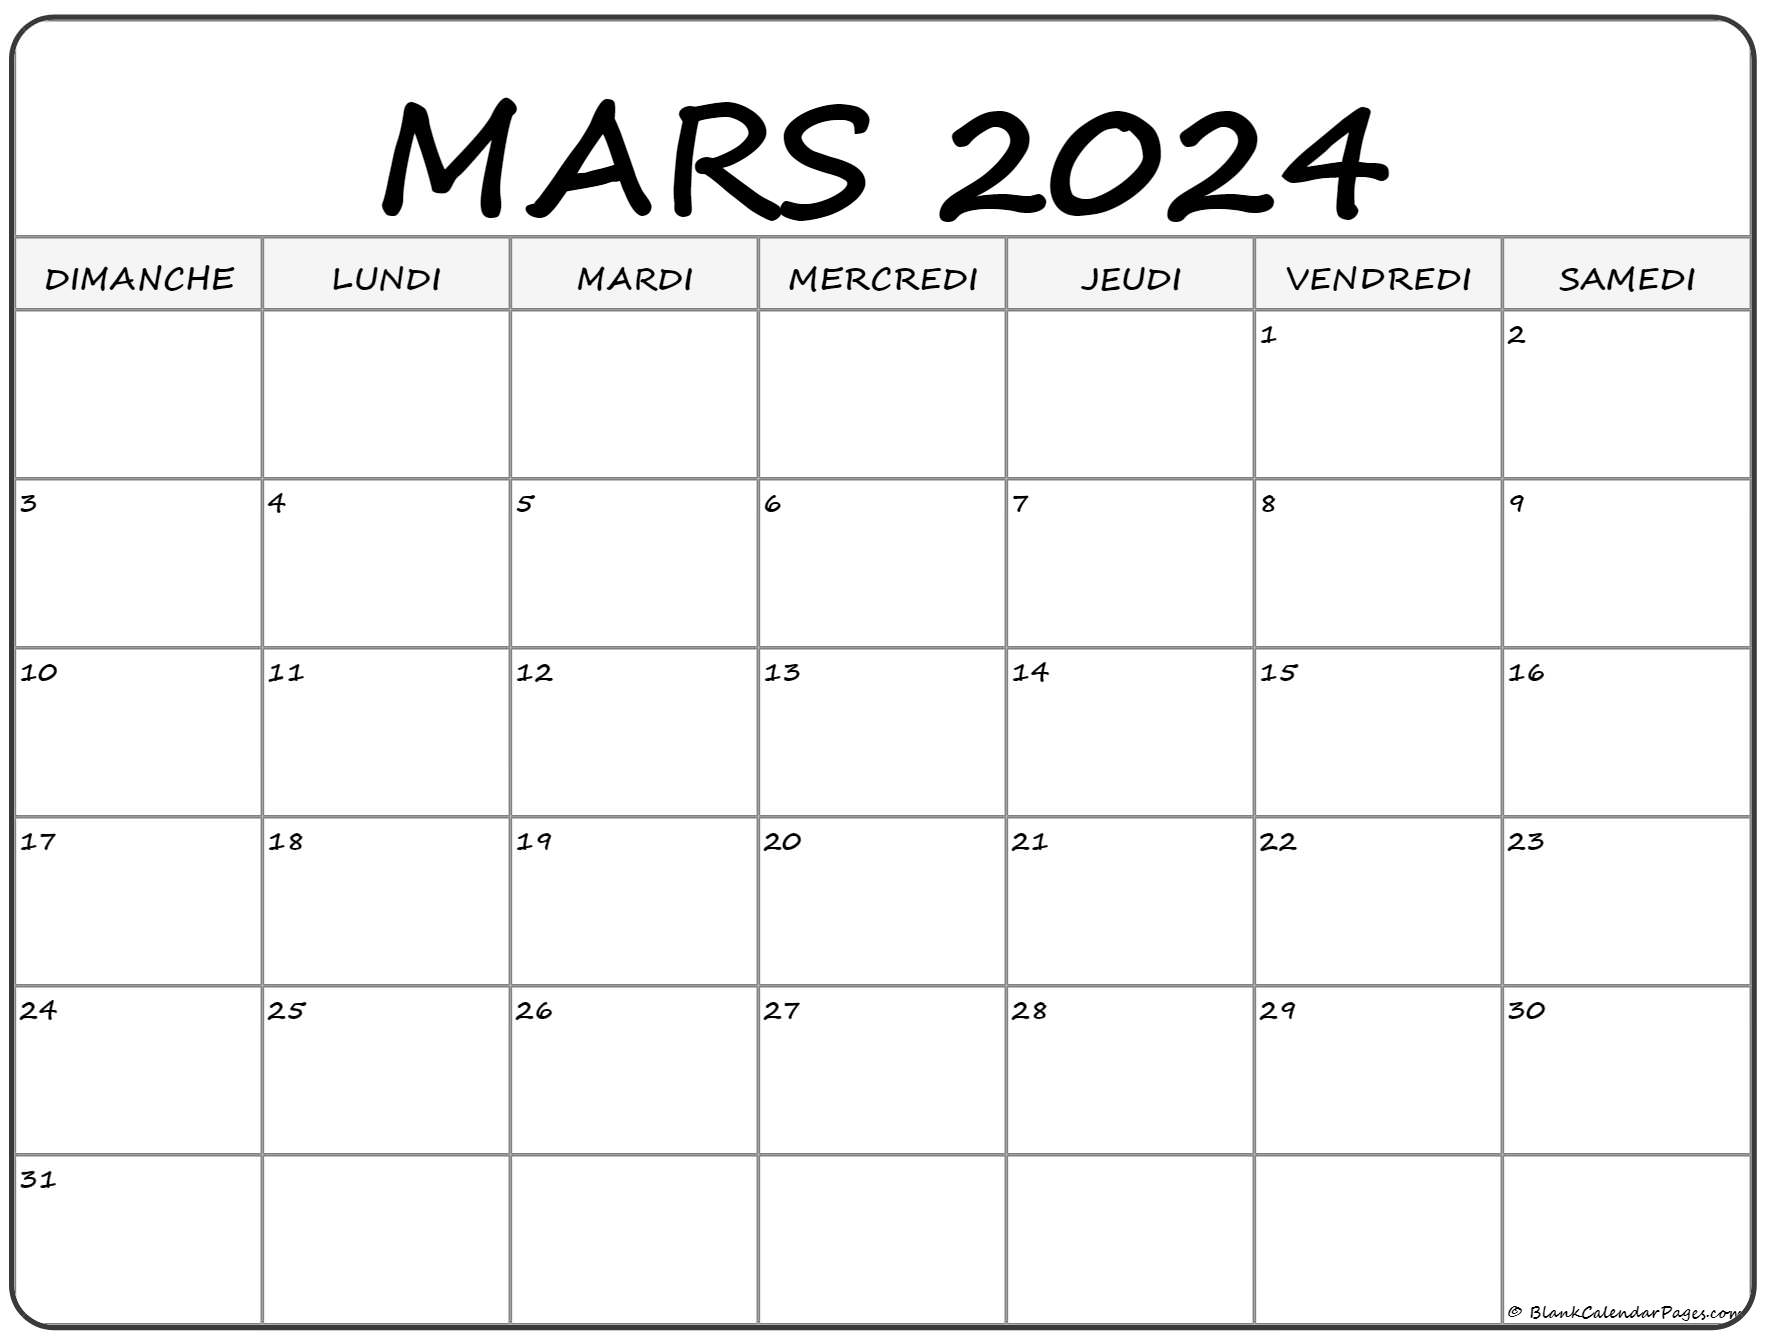 Calendrier Mensuel Mars 2022 mars 2022 calendrier imprimable | Calendrier gratuit